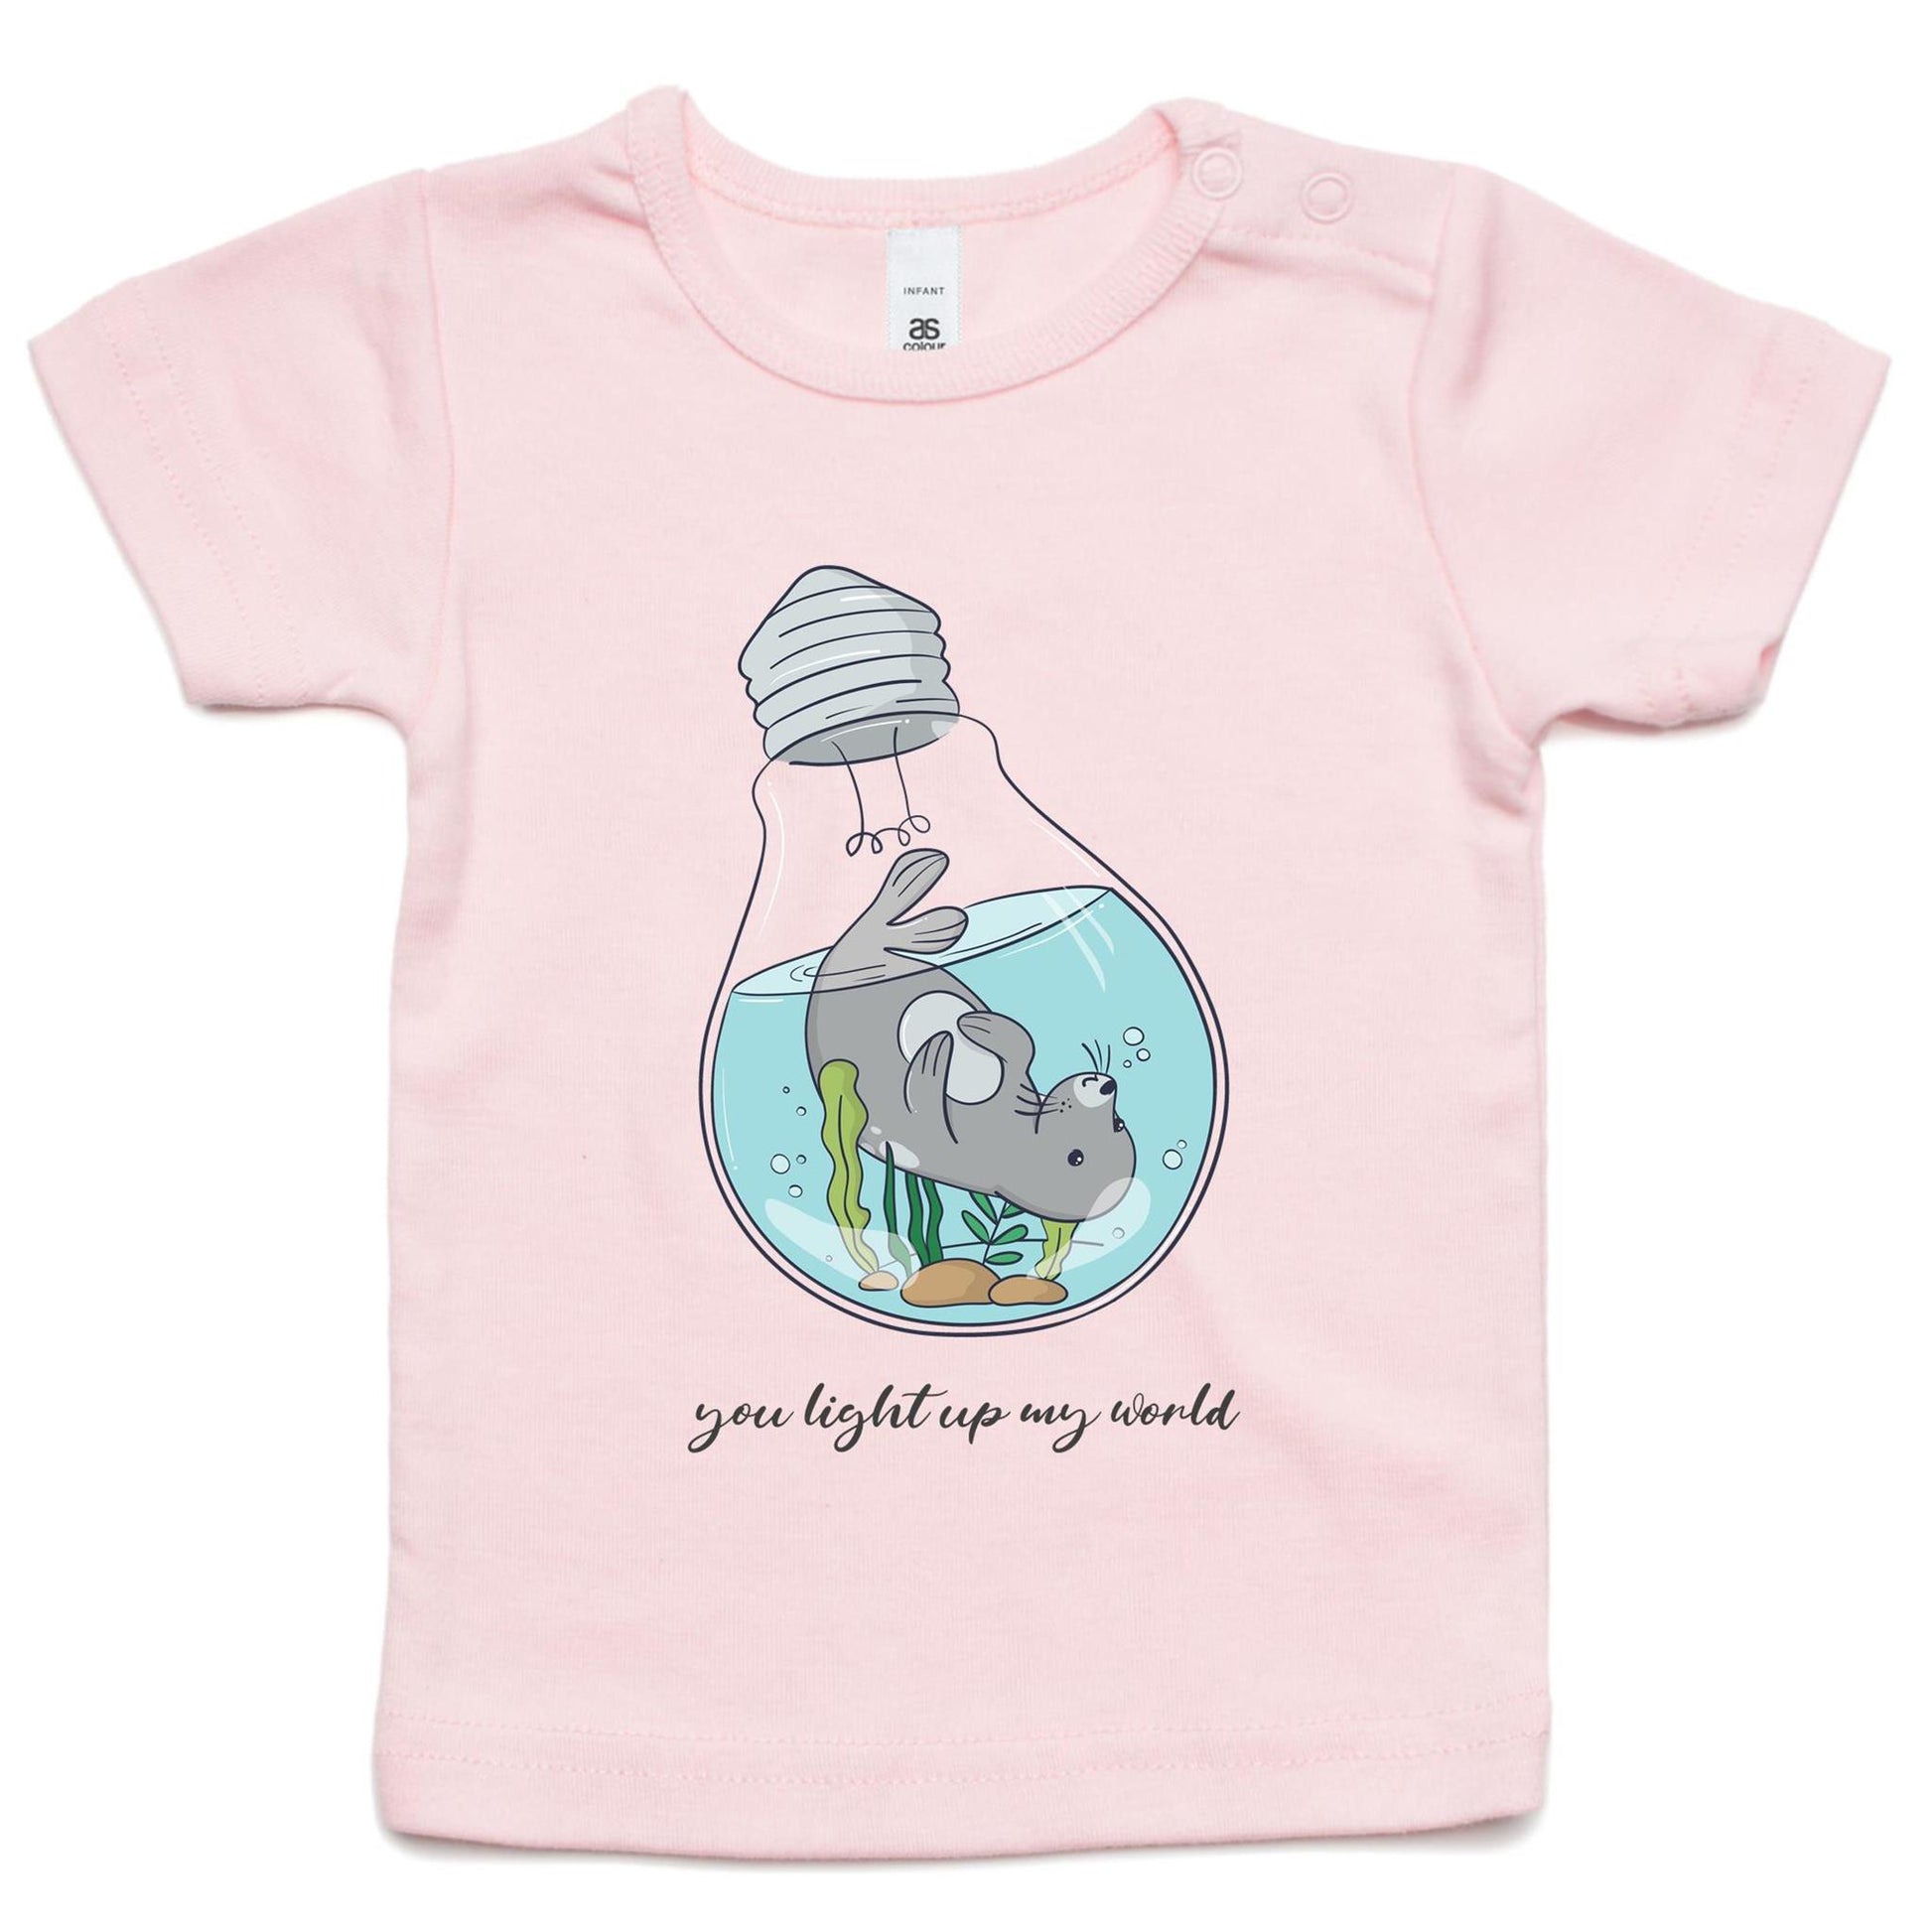 You Light Up My World - Baby T-shirt Pink Baby T-shirt animal